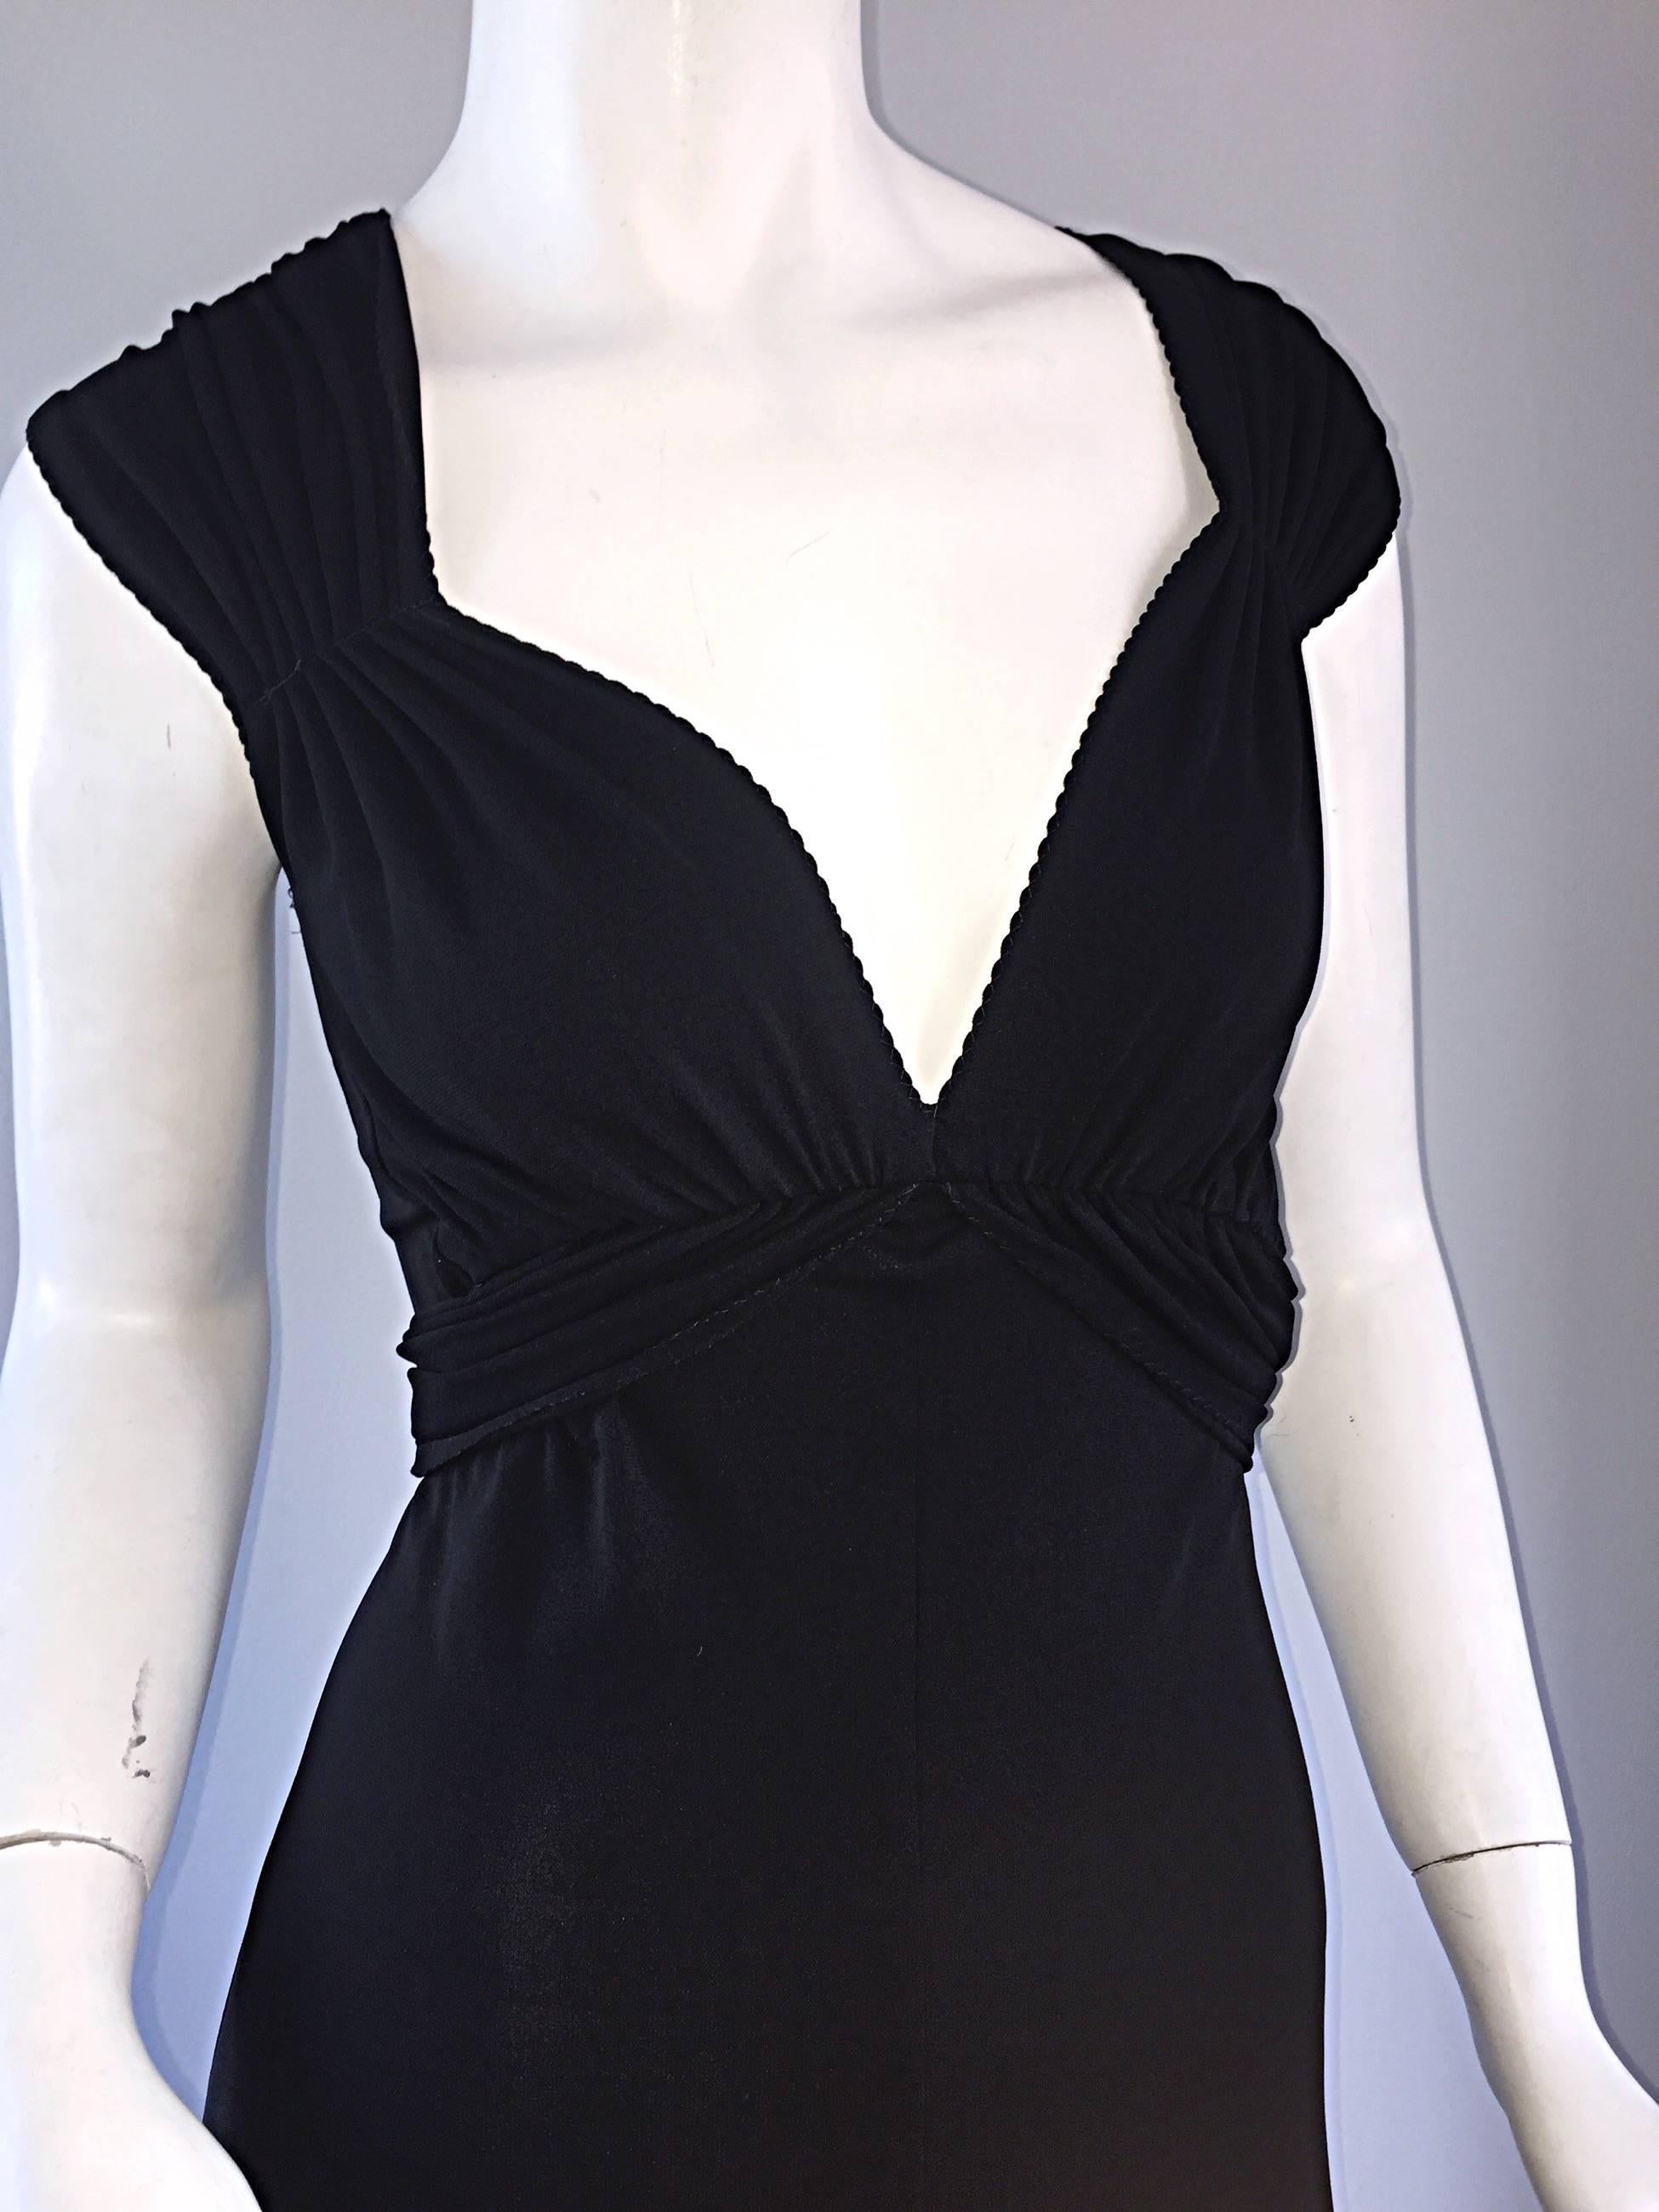 Michael Kors Collection Black Cap Sleeve Jersey Little Black Dress Size ...